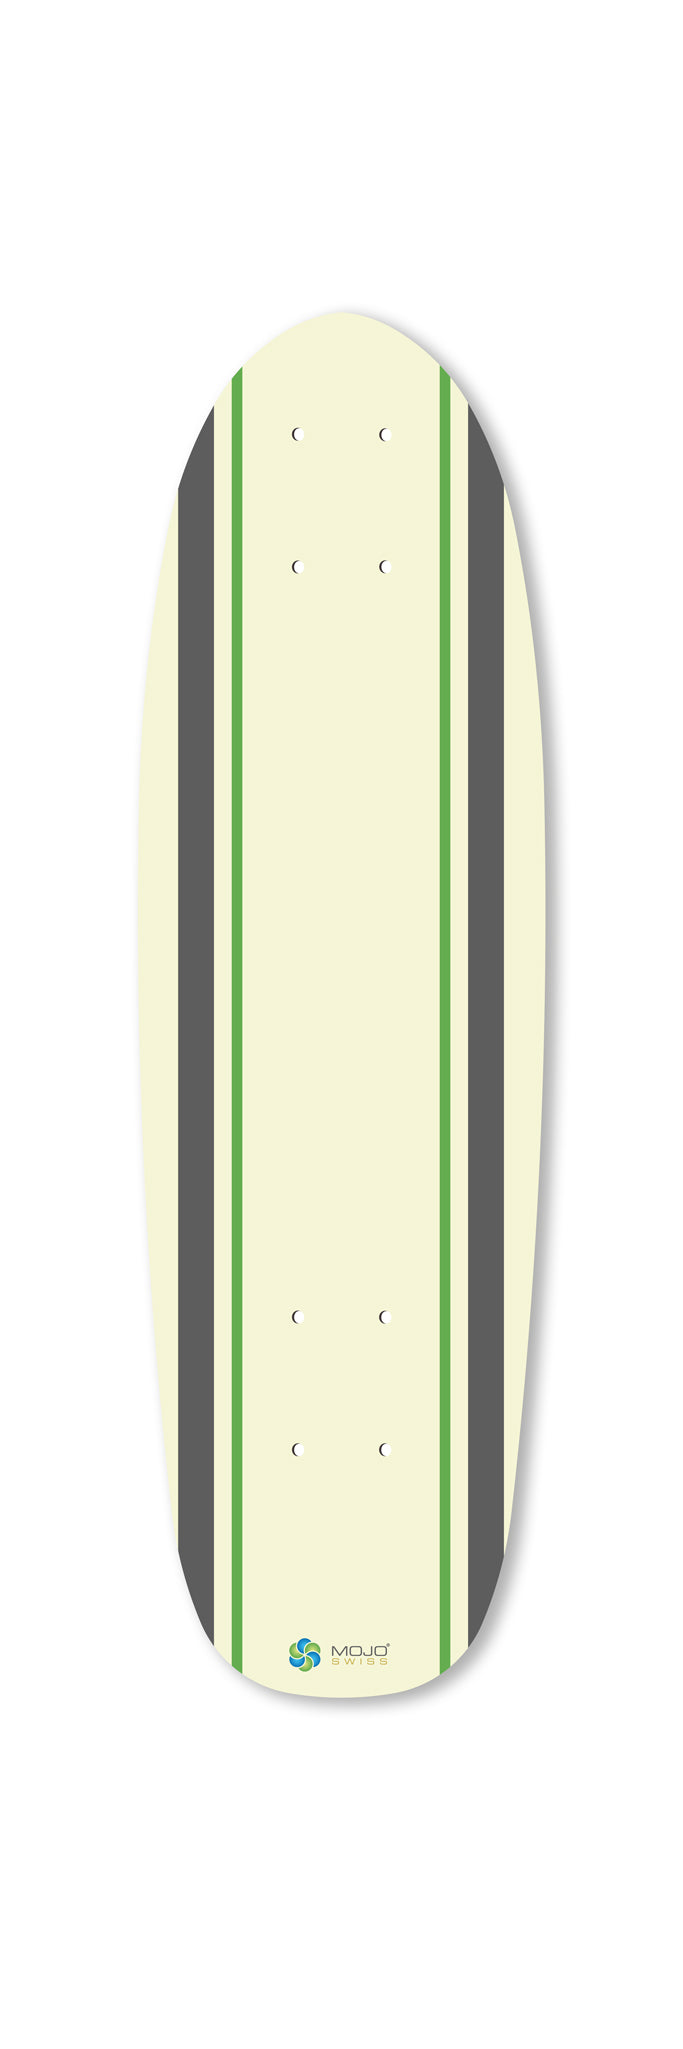 St.Giron Mini 670 art skateboard deck frontside. Limited edition by Markus Oz Huber